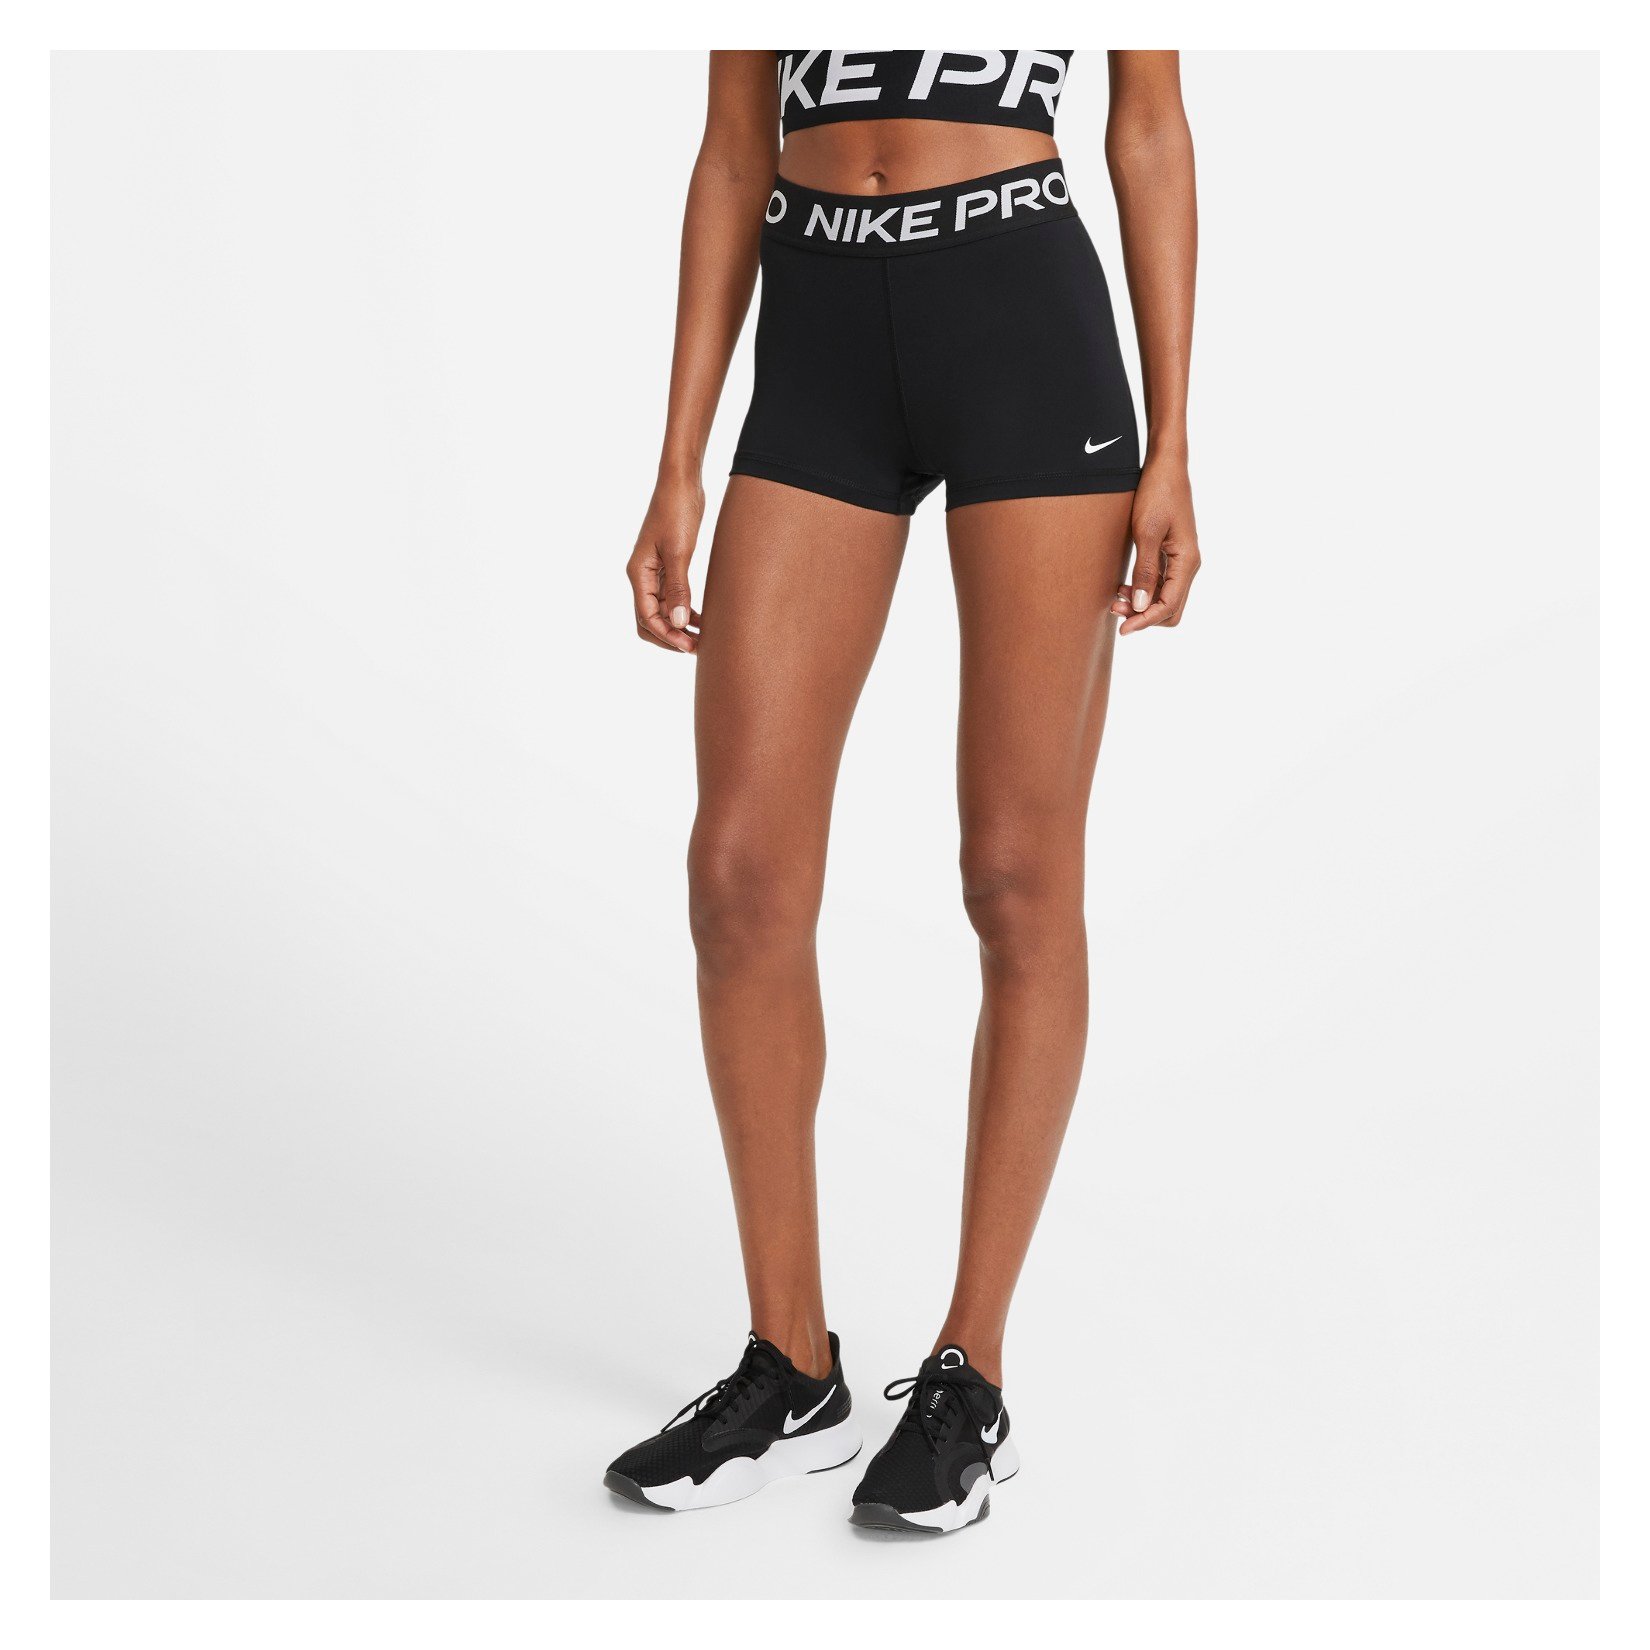 Nike Pro Womens 3 Inch Shorts - Kitlocker.com